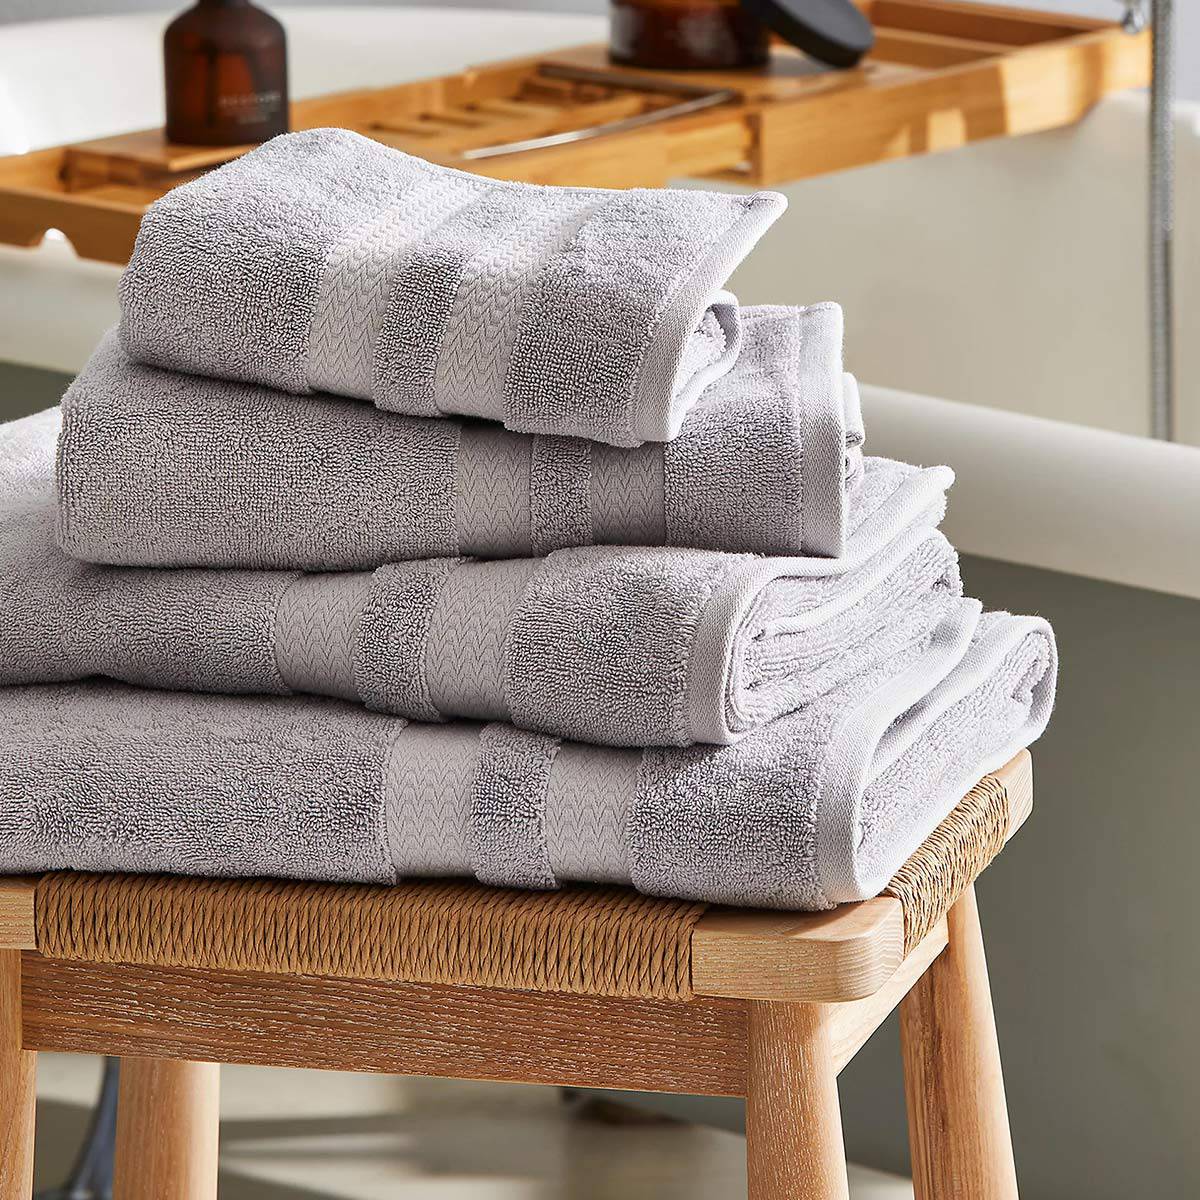 Light-grey towels on stool